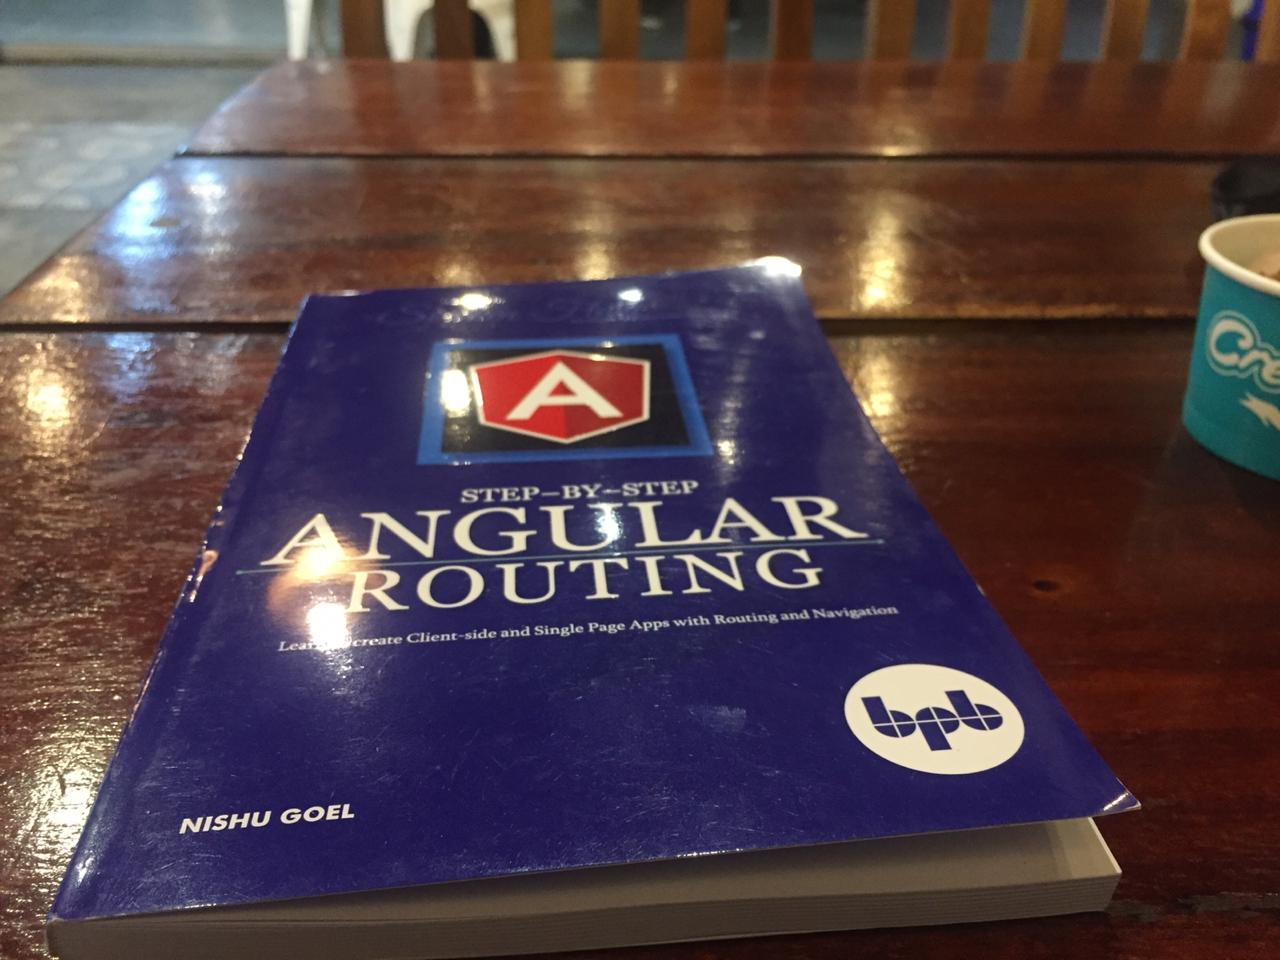 Buku Angular Routing pada tabel.